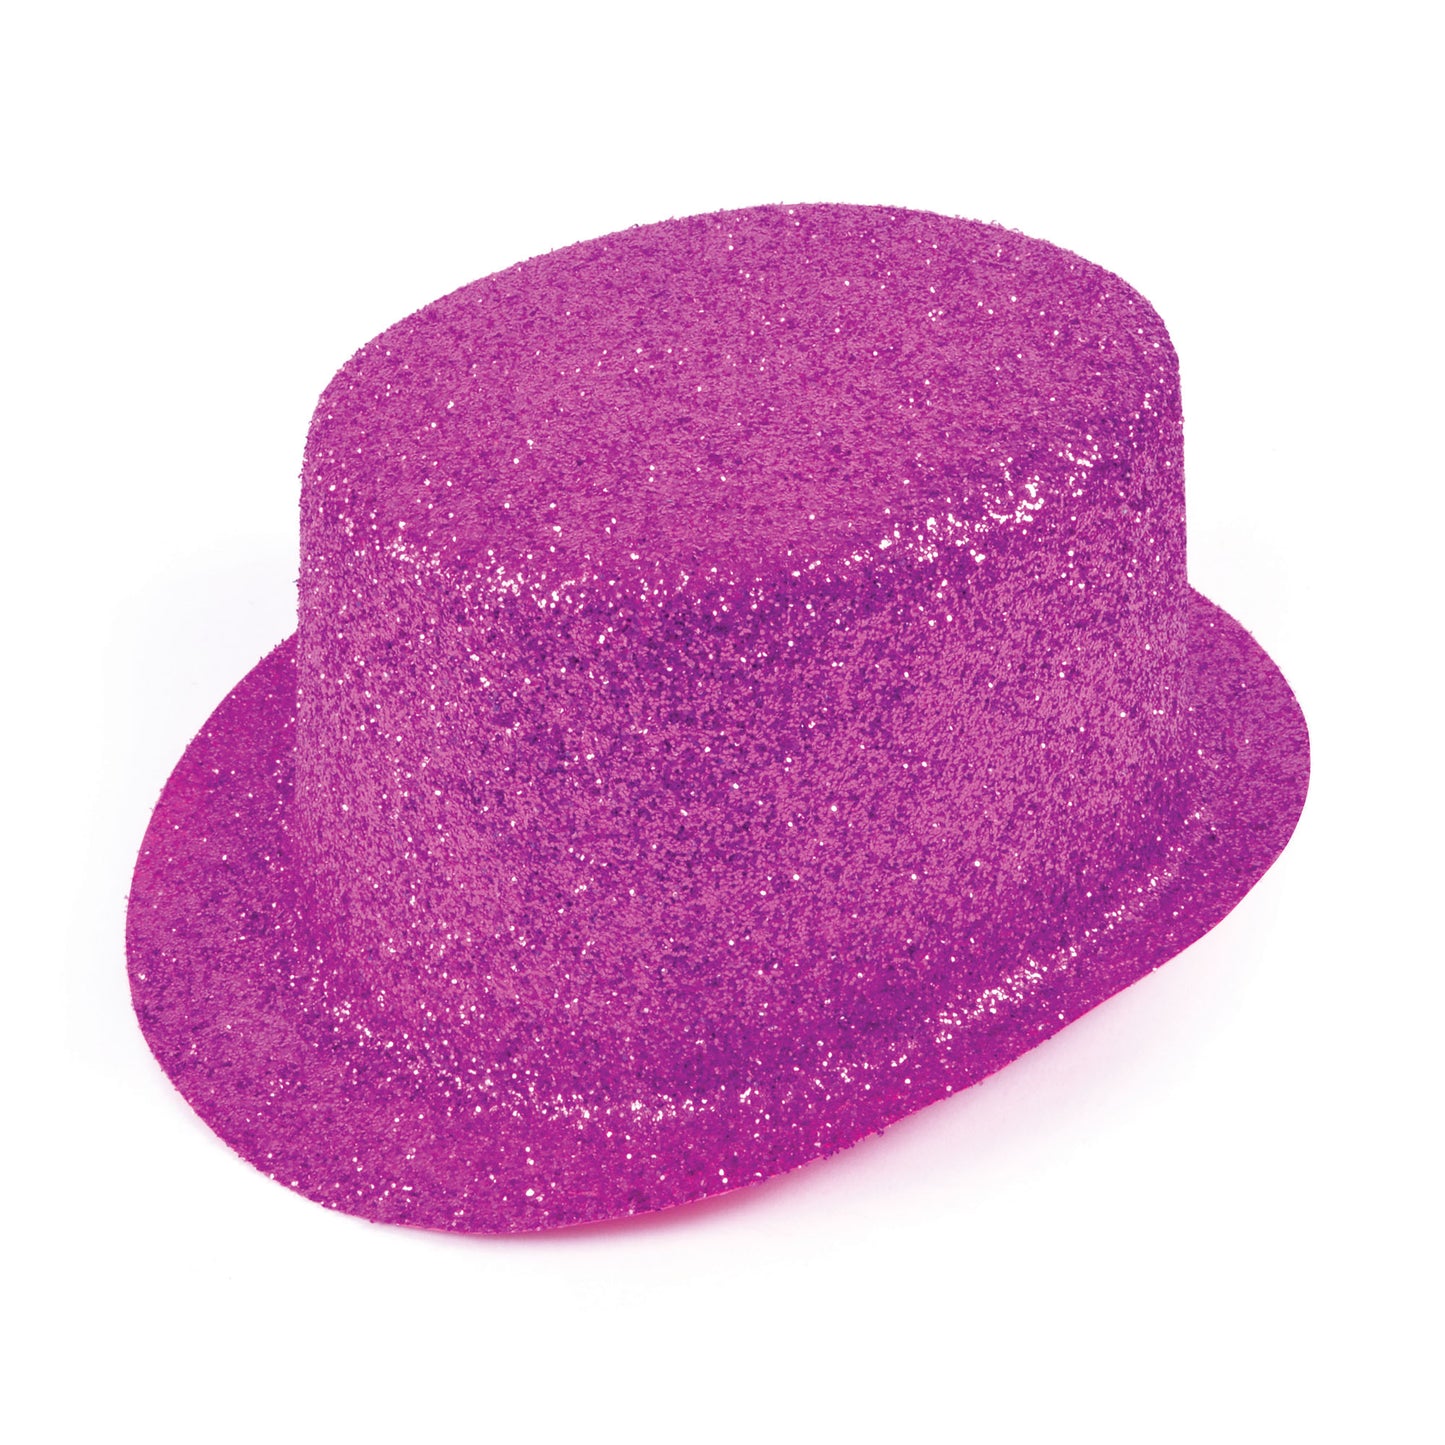 Glitter Top Hat